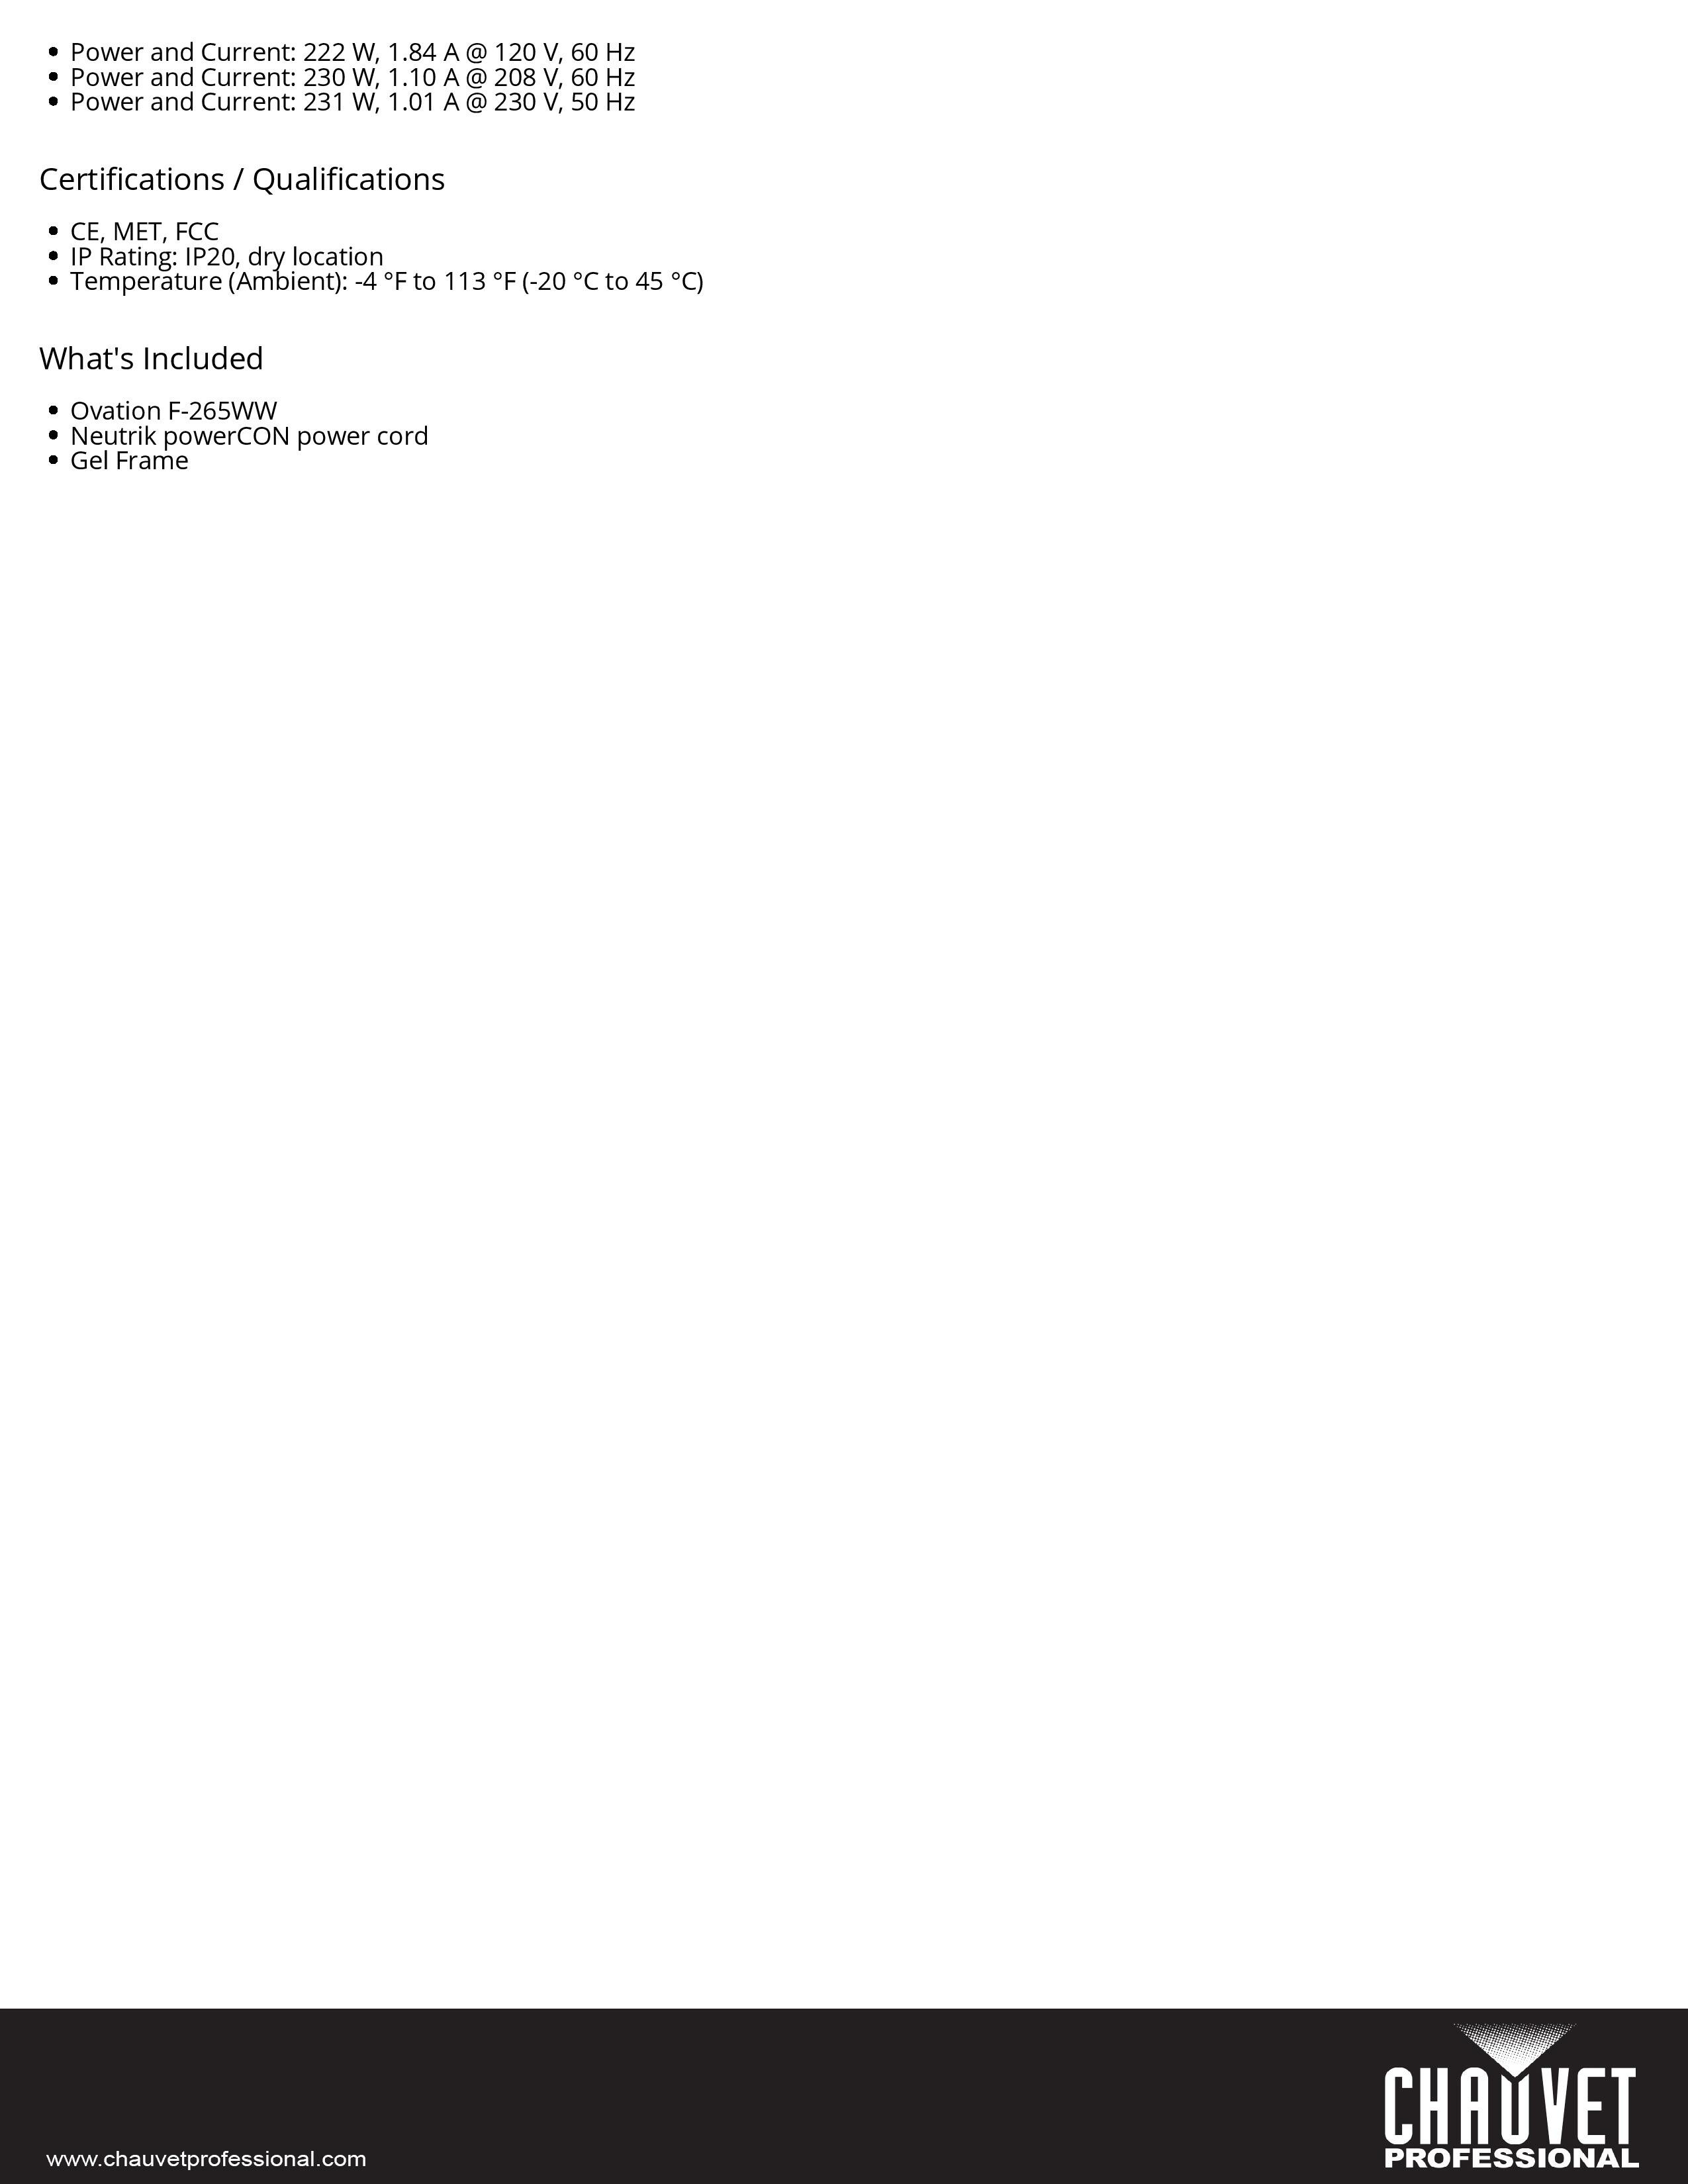 Tehnički list Chauvet Professional Ovation F-265WW strana-002.jpg